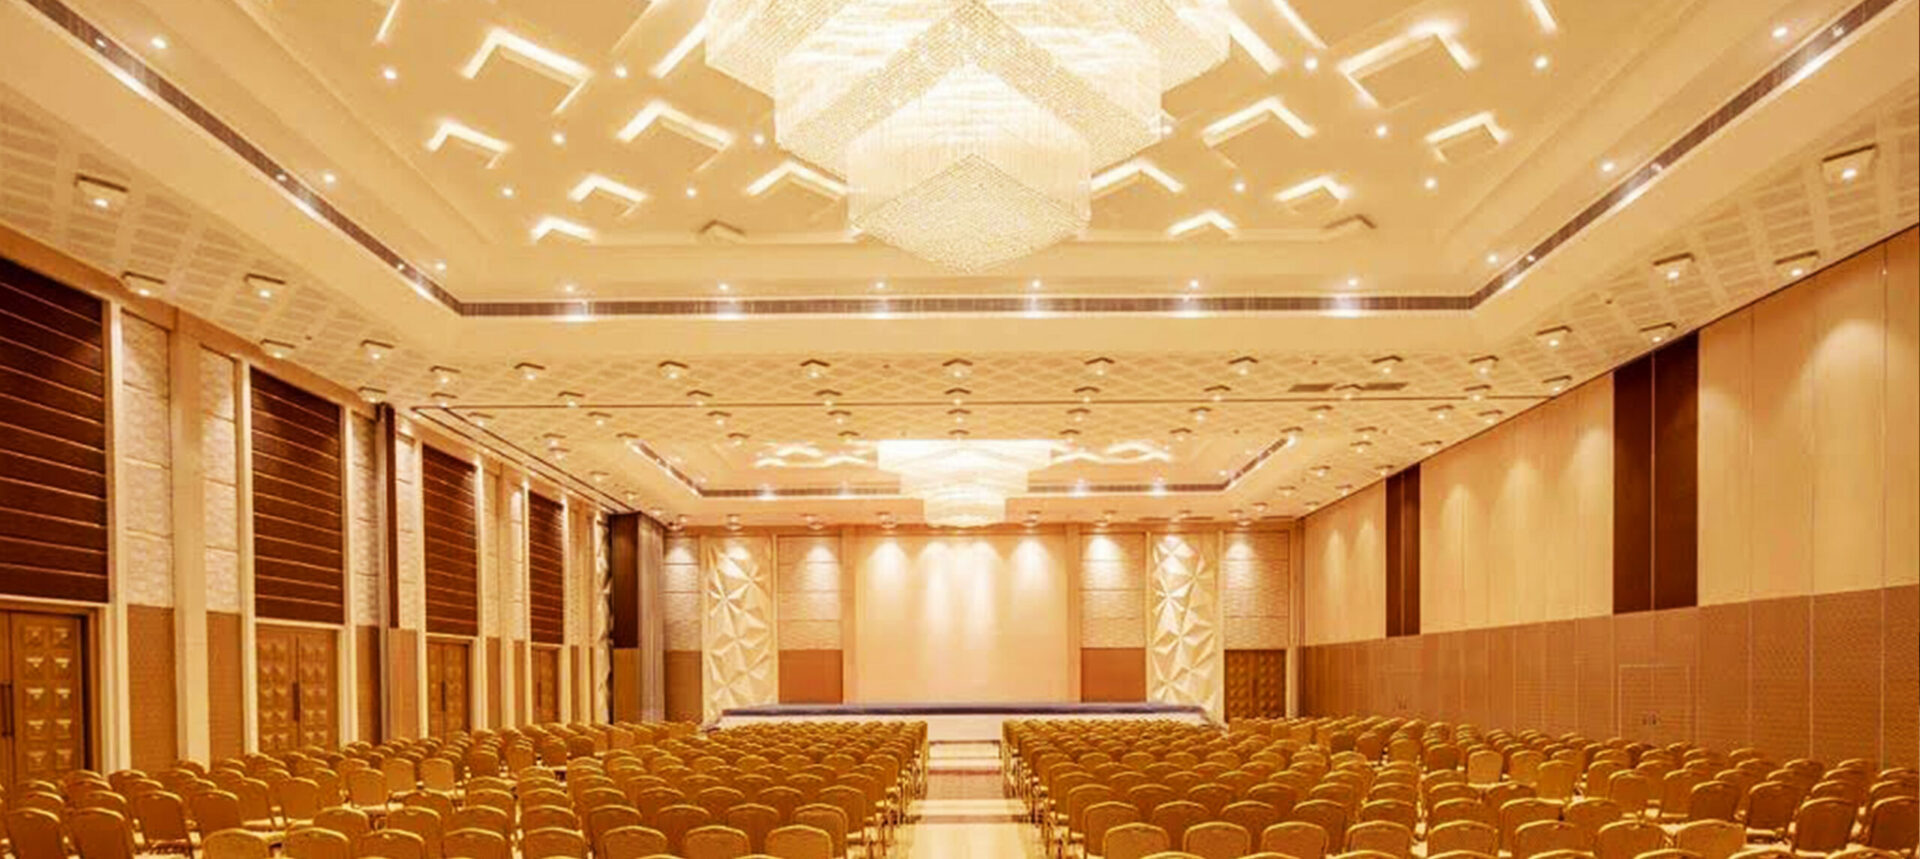 Suganya Convention Hall - Design Collaborative